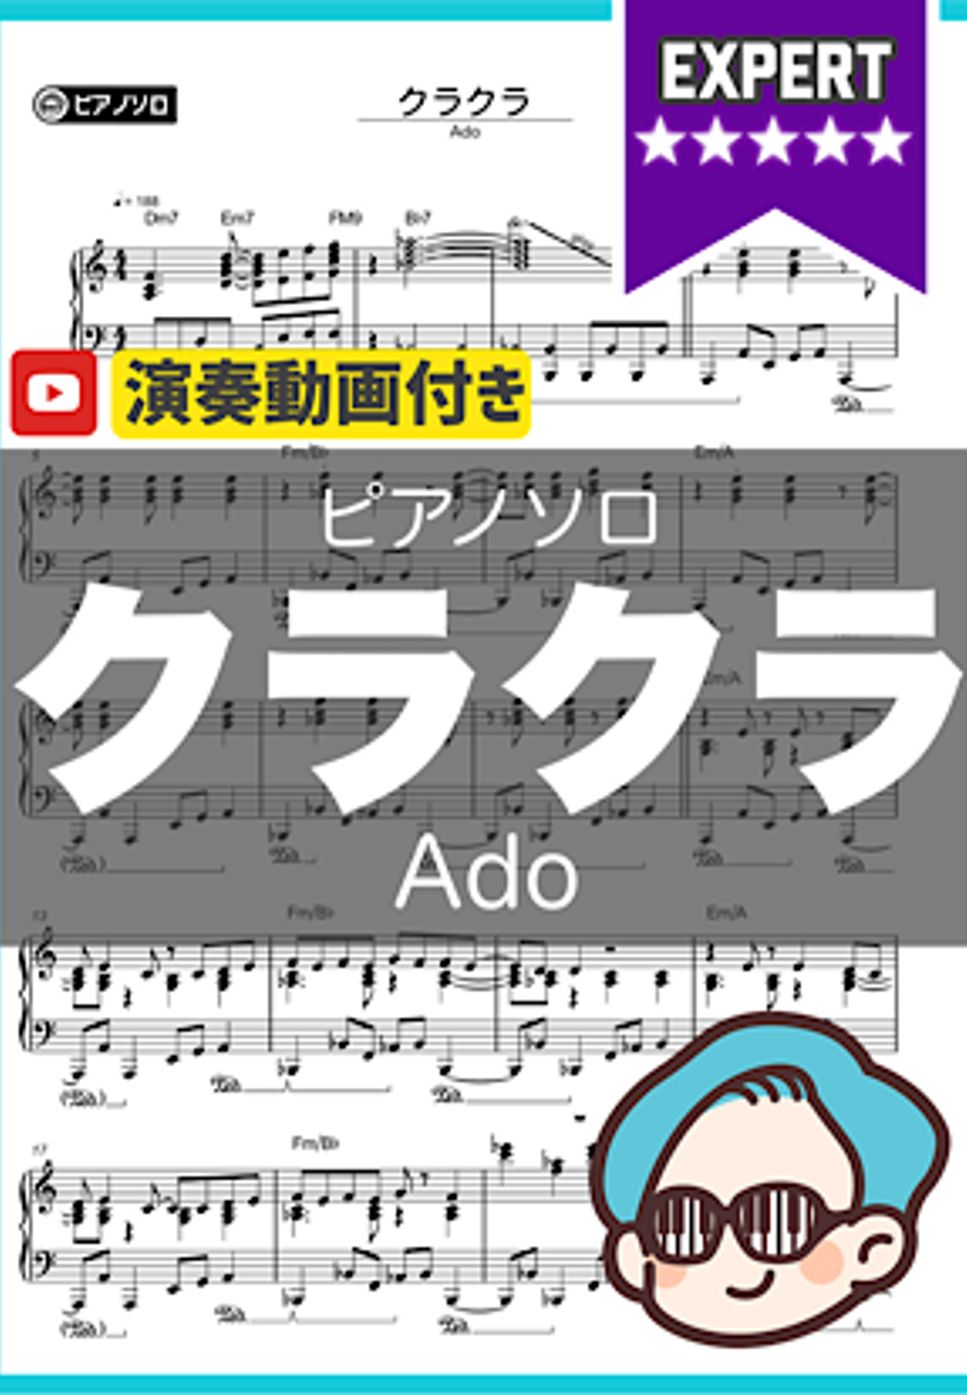 Ado - クラクラ by シータピアノ